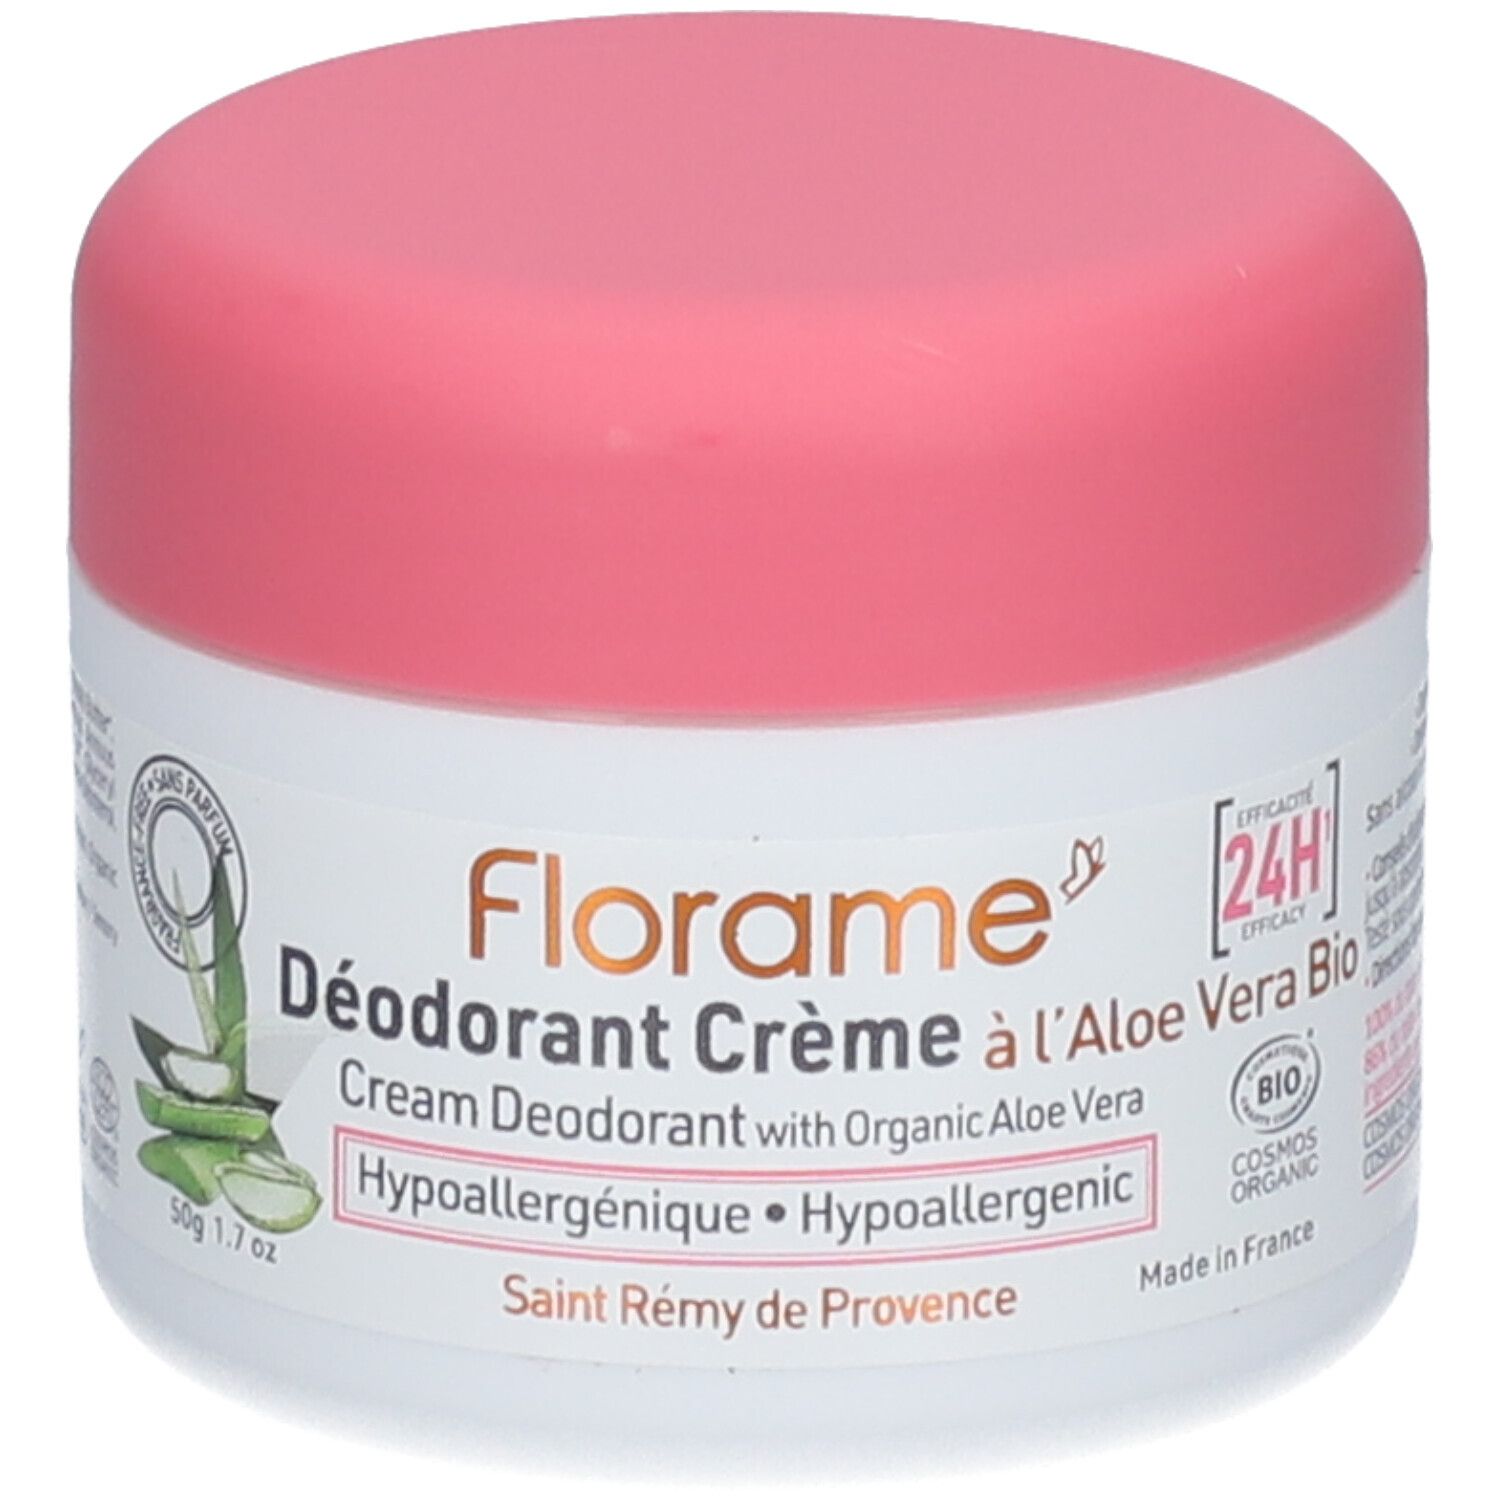 Florame Aloe Vera Creme Deodorant Hypoallergen Bio 24H